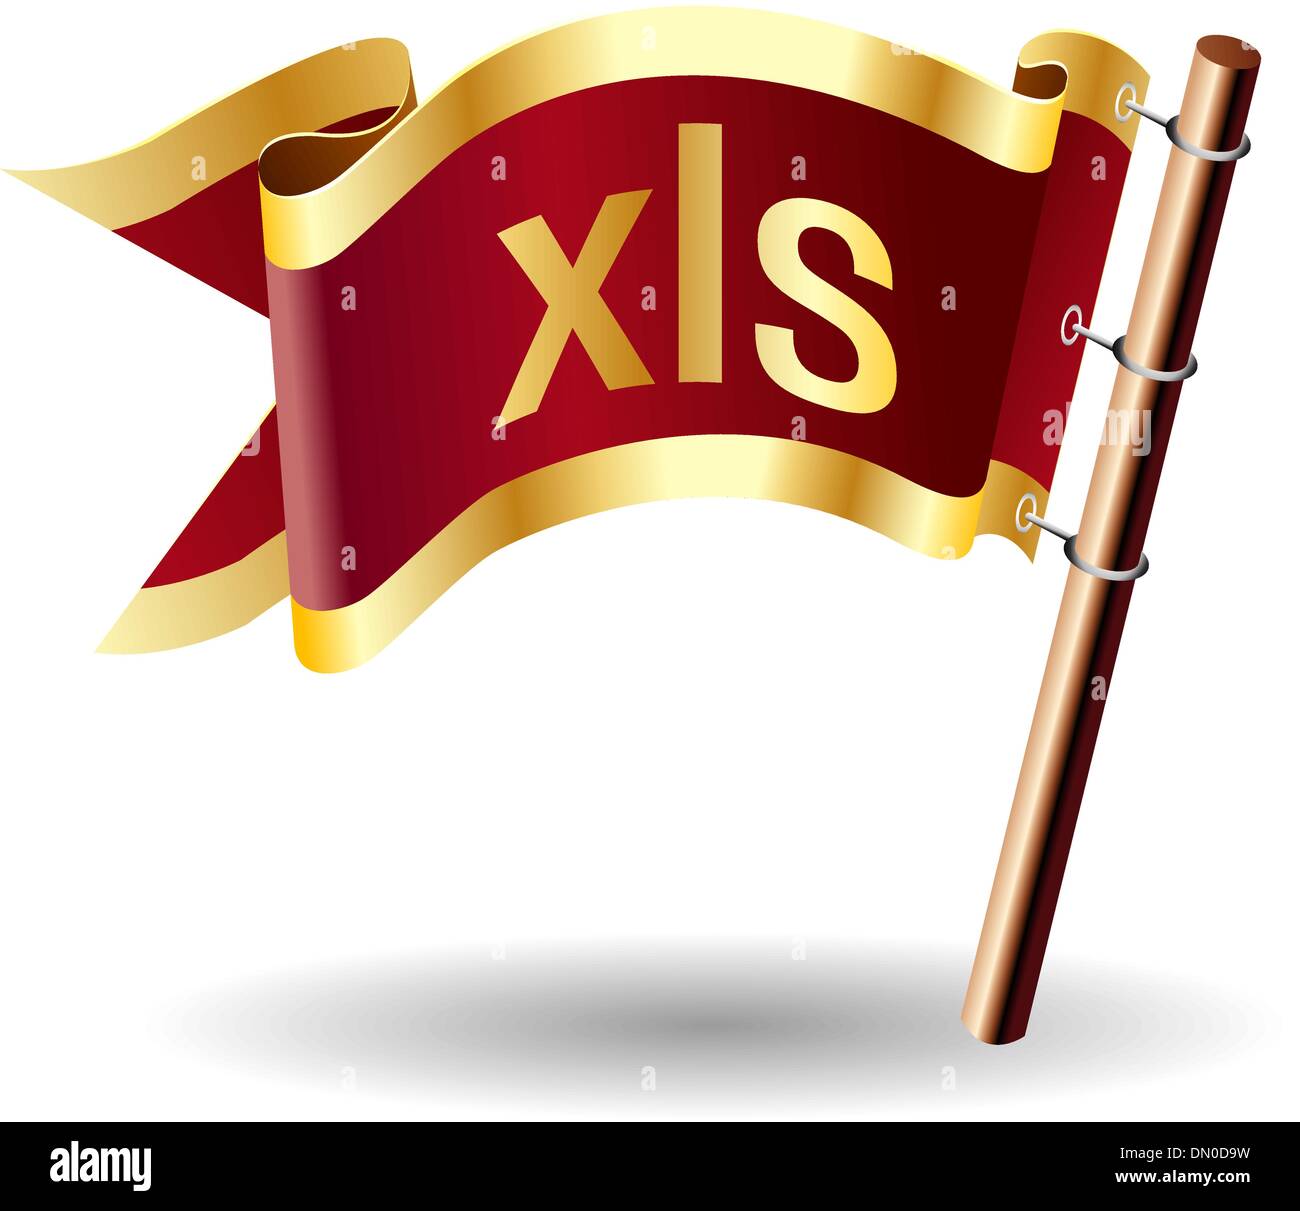 XLS file type royal flag Stock Vector